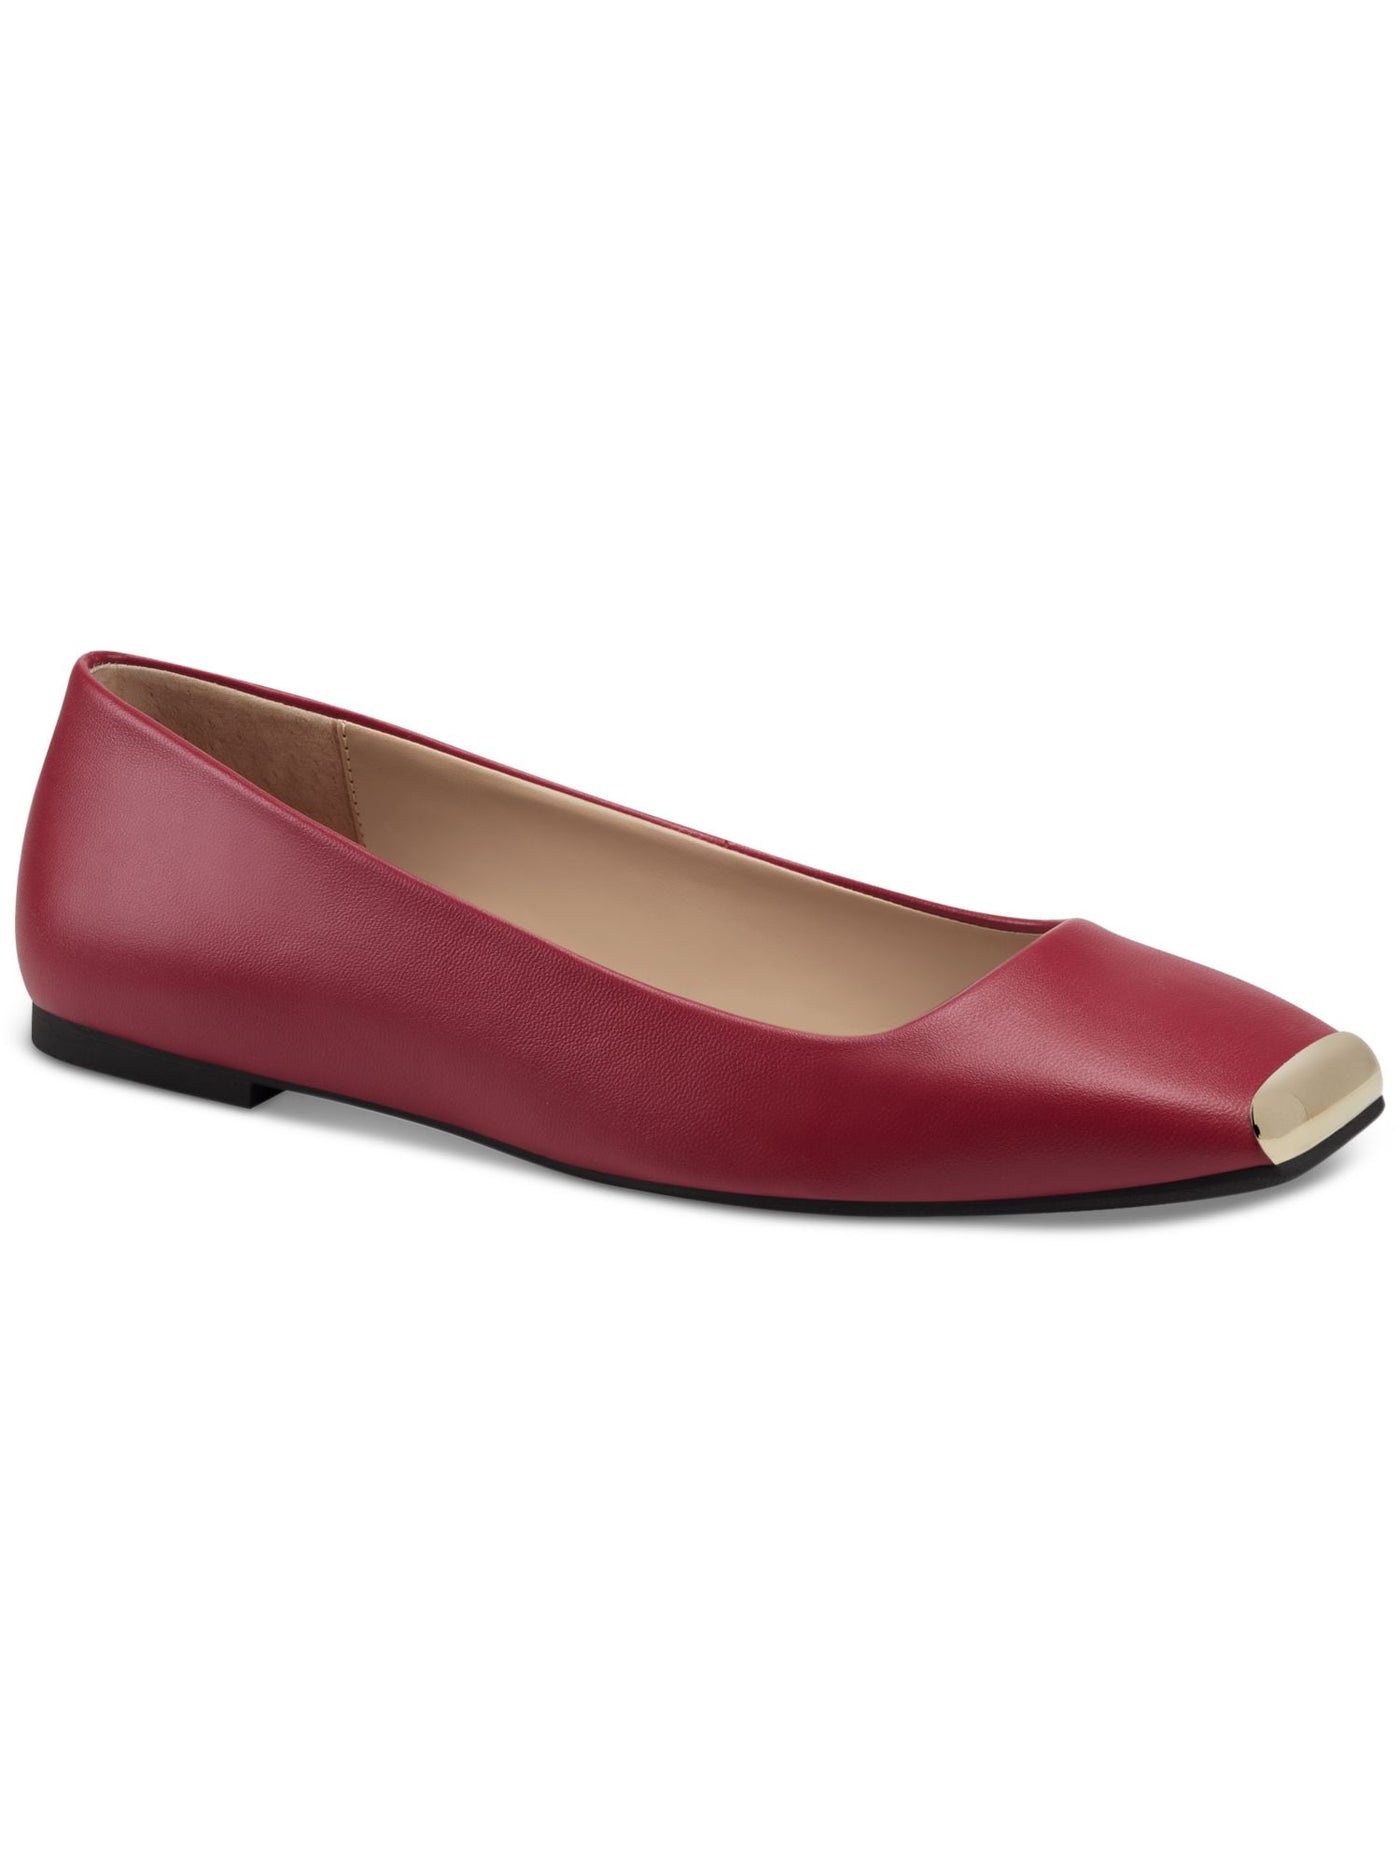 ALFANI Womens Red Flexible Sole Padded Metallic Neptoon Square Toe Block Heel Slip On Dress Flats Shoes 9.5 M